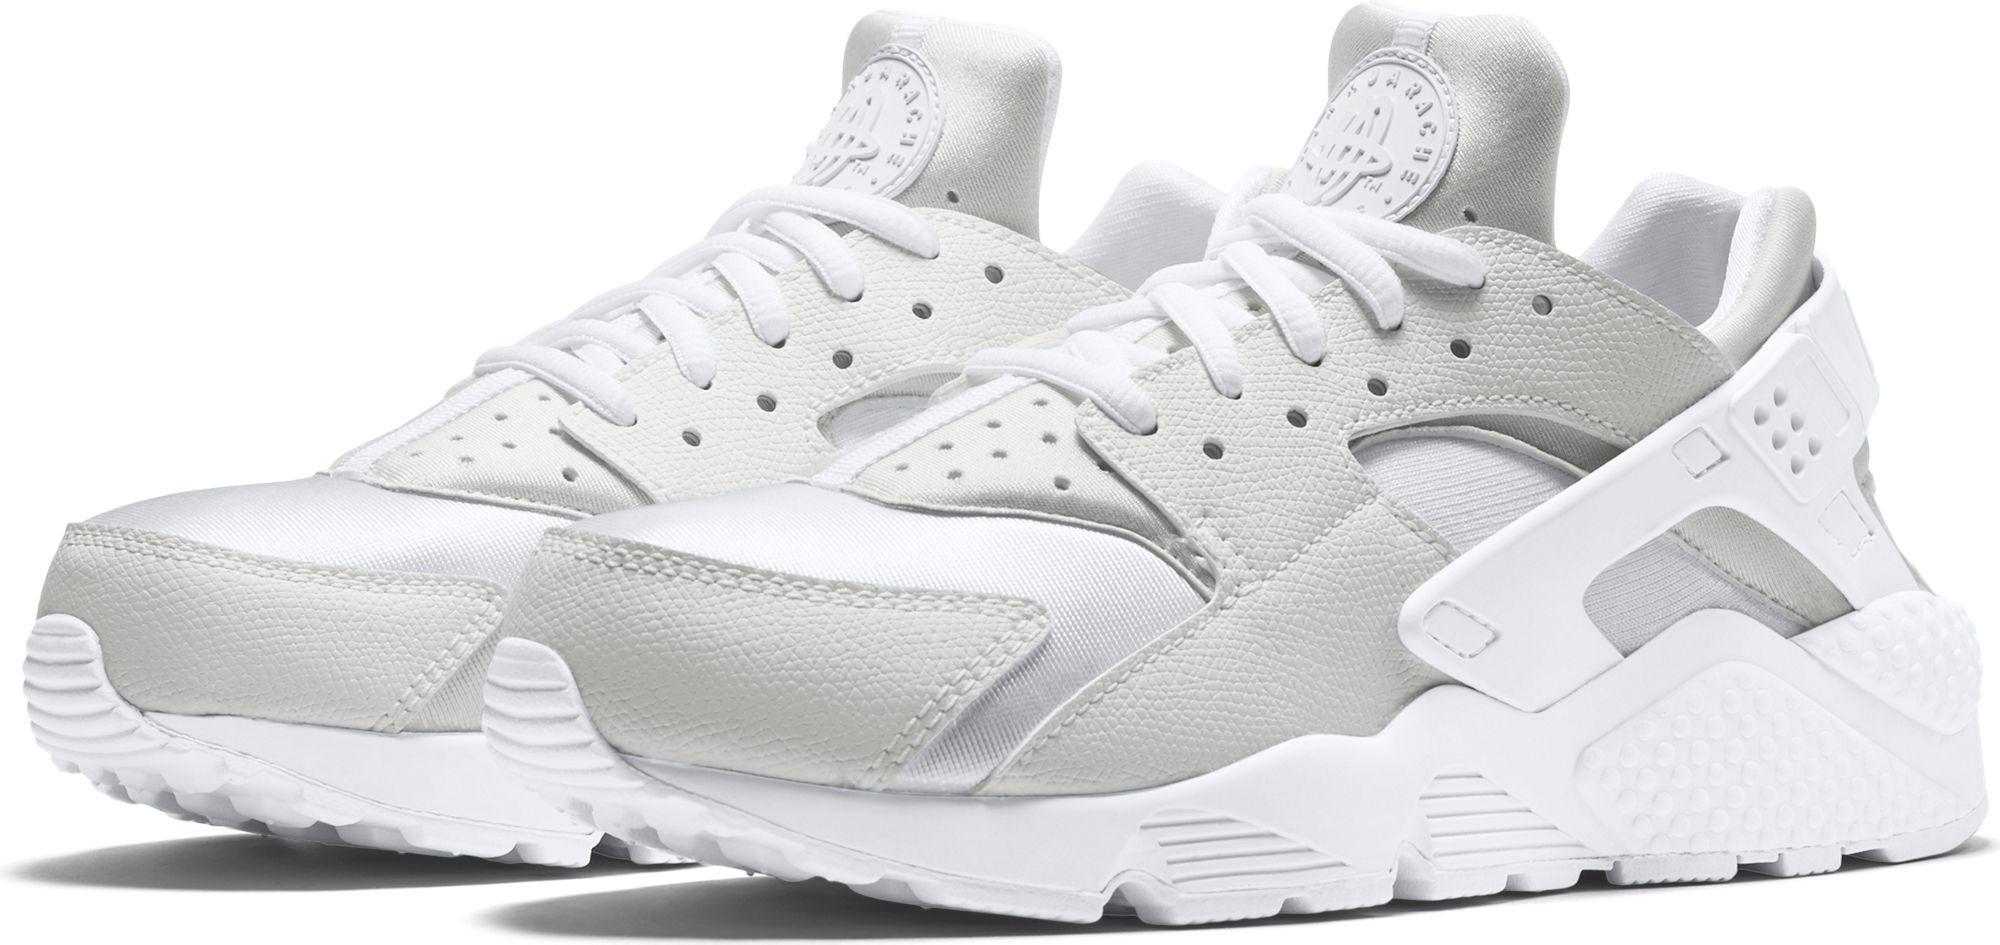 Nike Air Huarache Run Ultra Shoes in 9.5 (White) for Men - Lyst